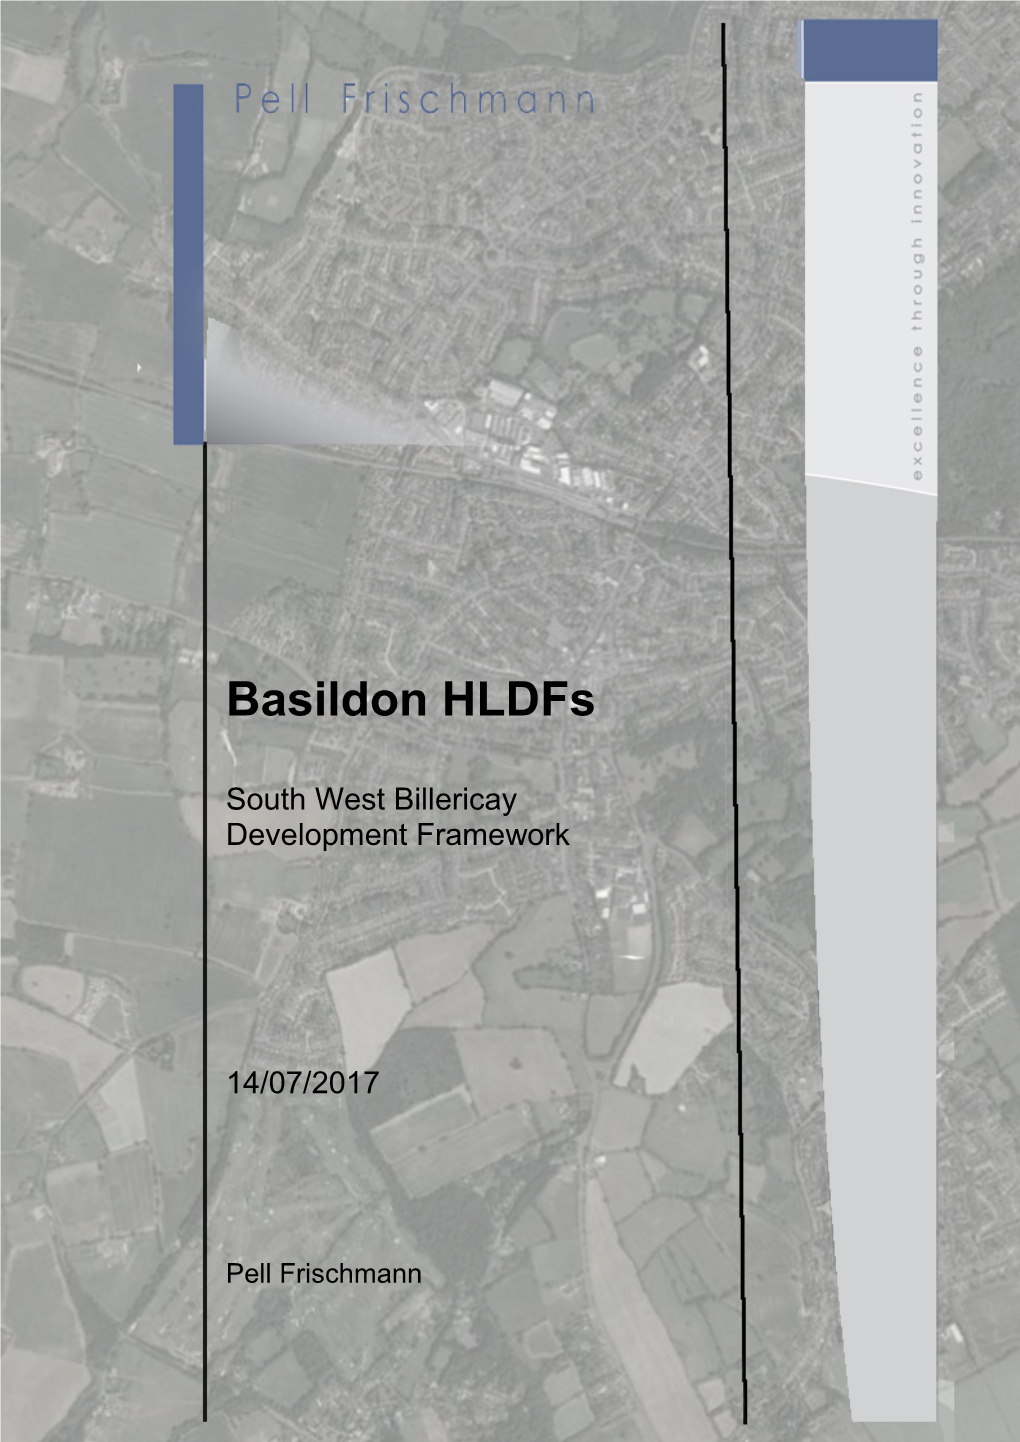 South West Billericay High Level Development Framework Options Evaluation